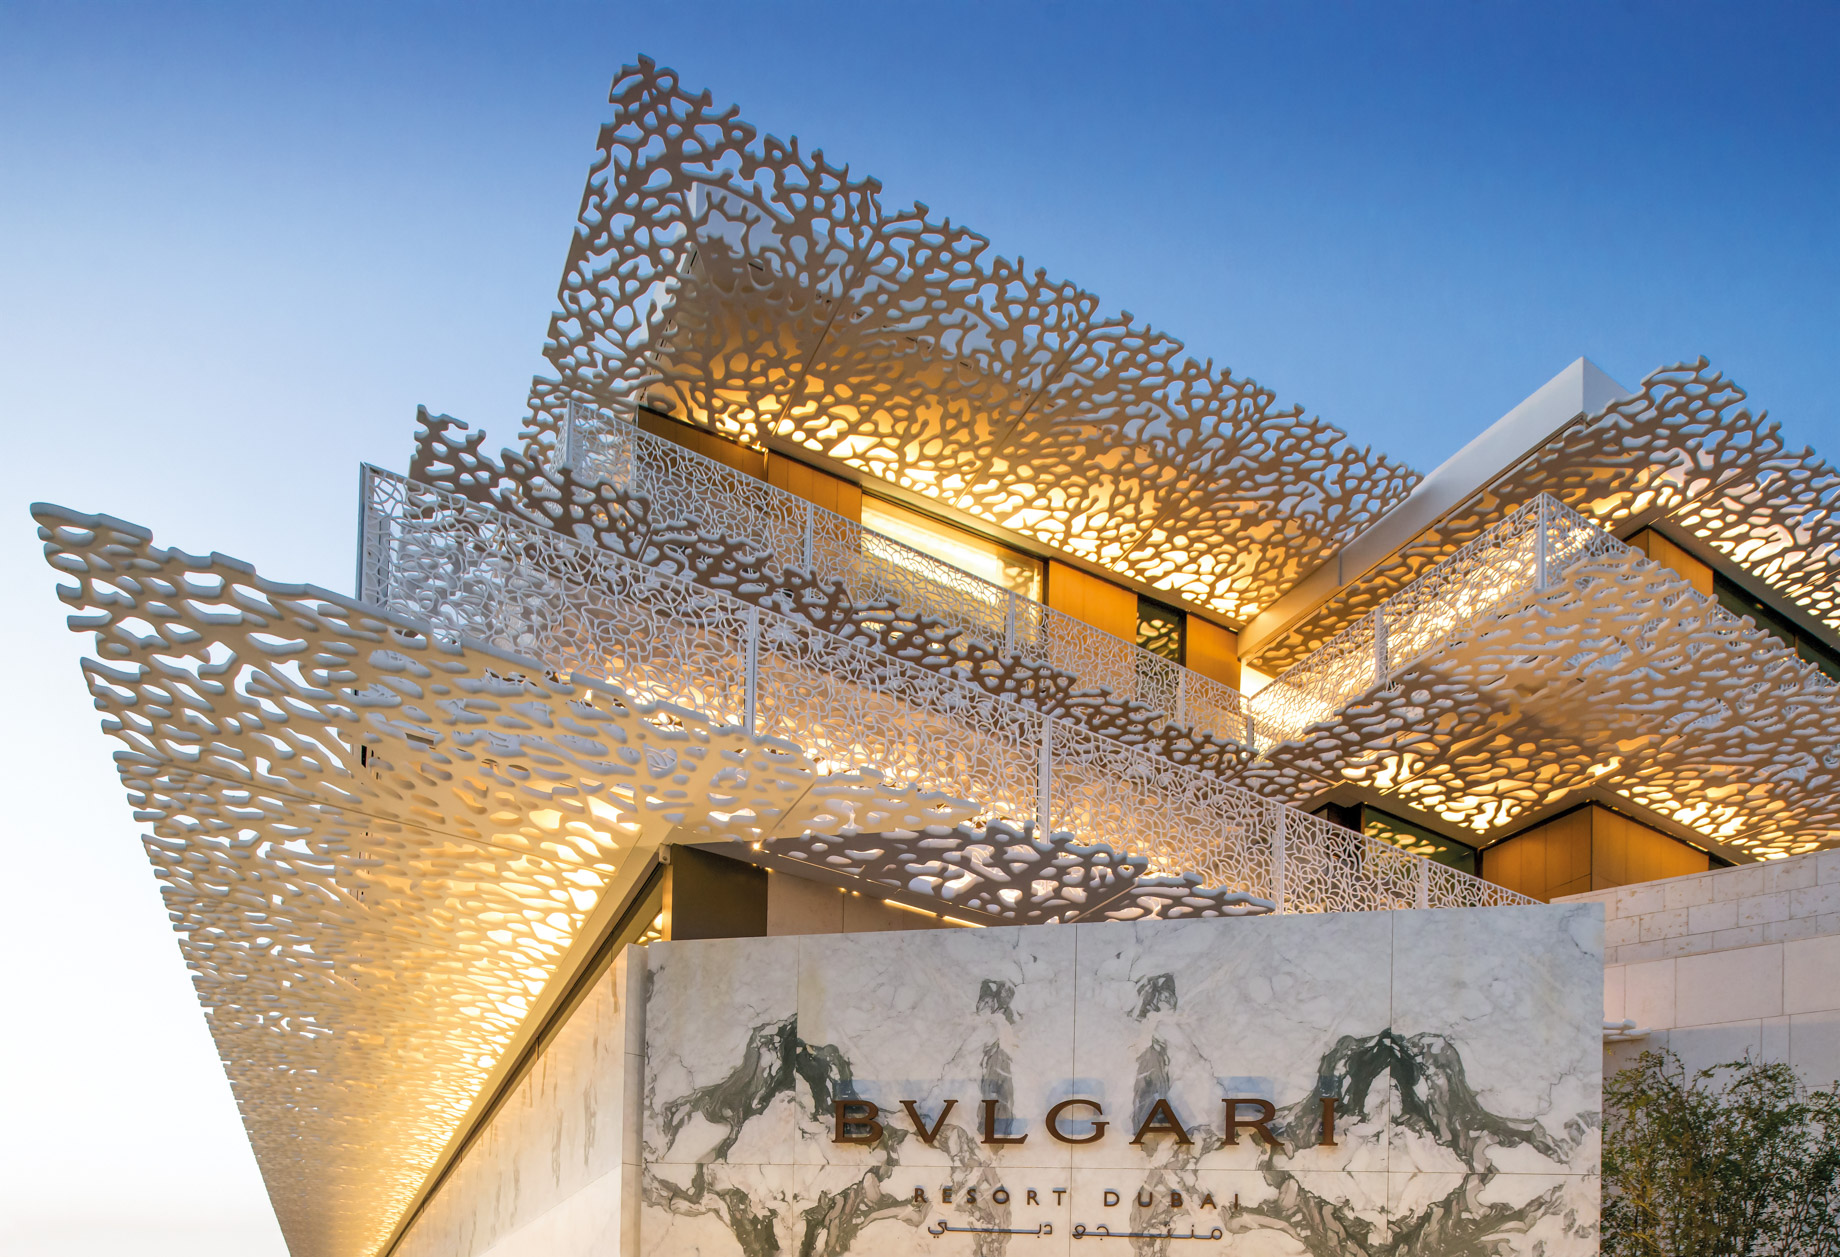 Bvlgari Resort Dubai – Jumeira Bay Island, Dubai, UAE – Resort Entrance Architecture